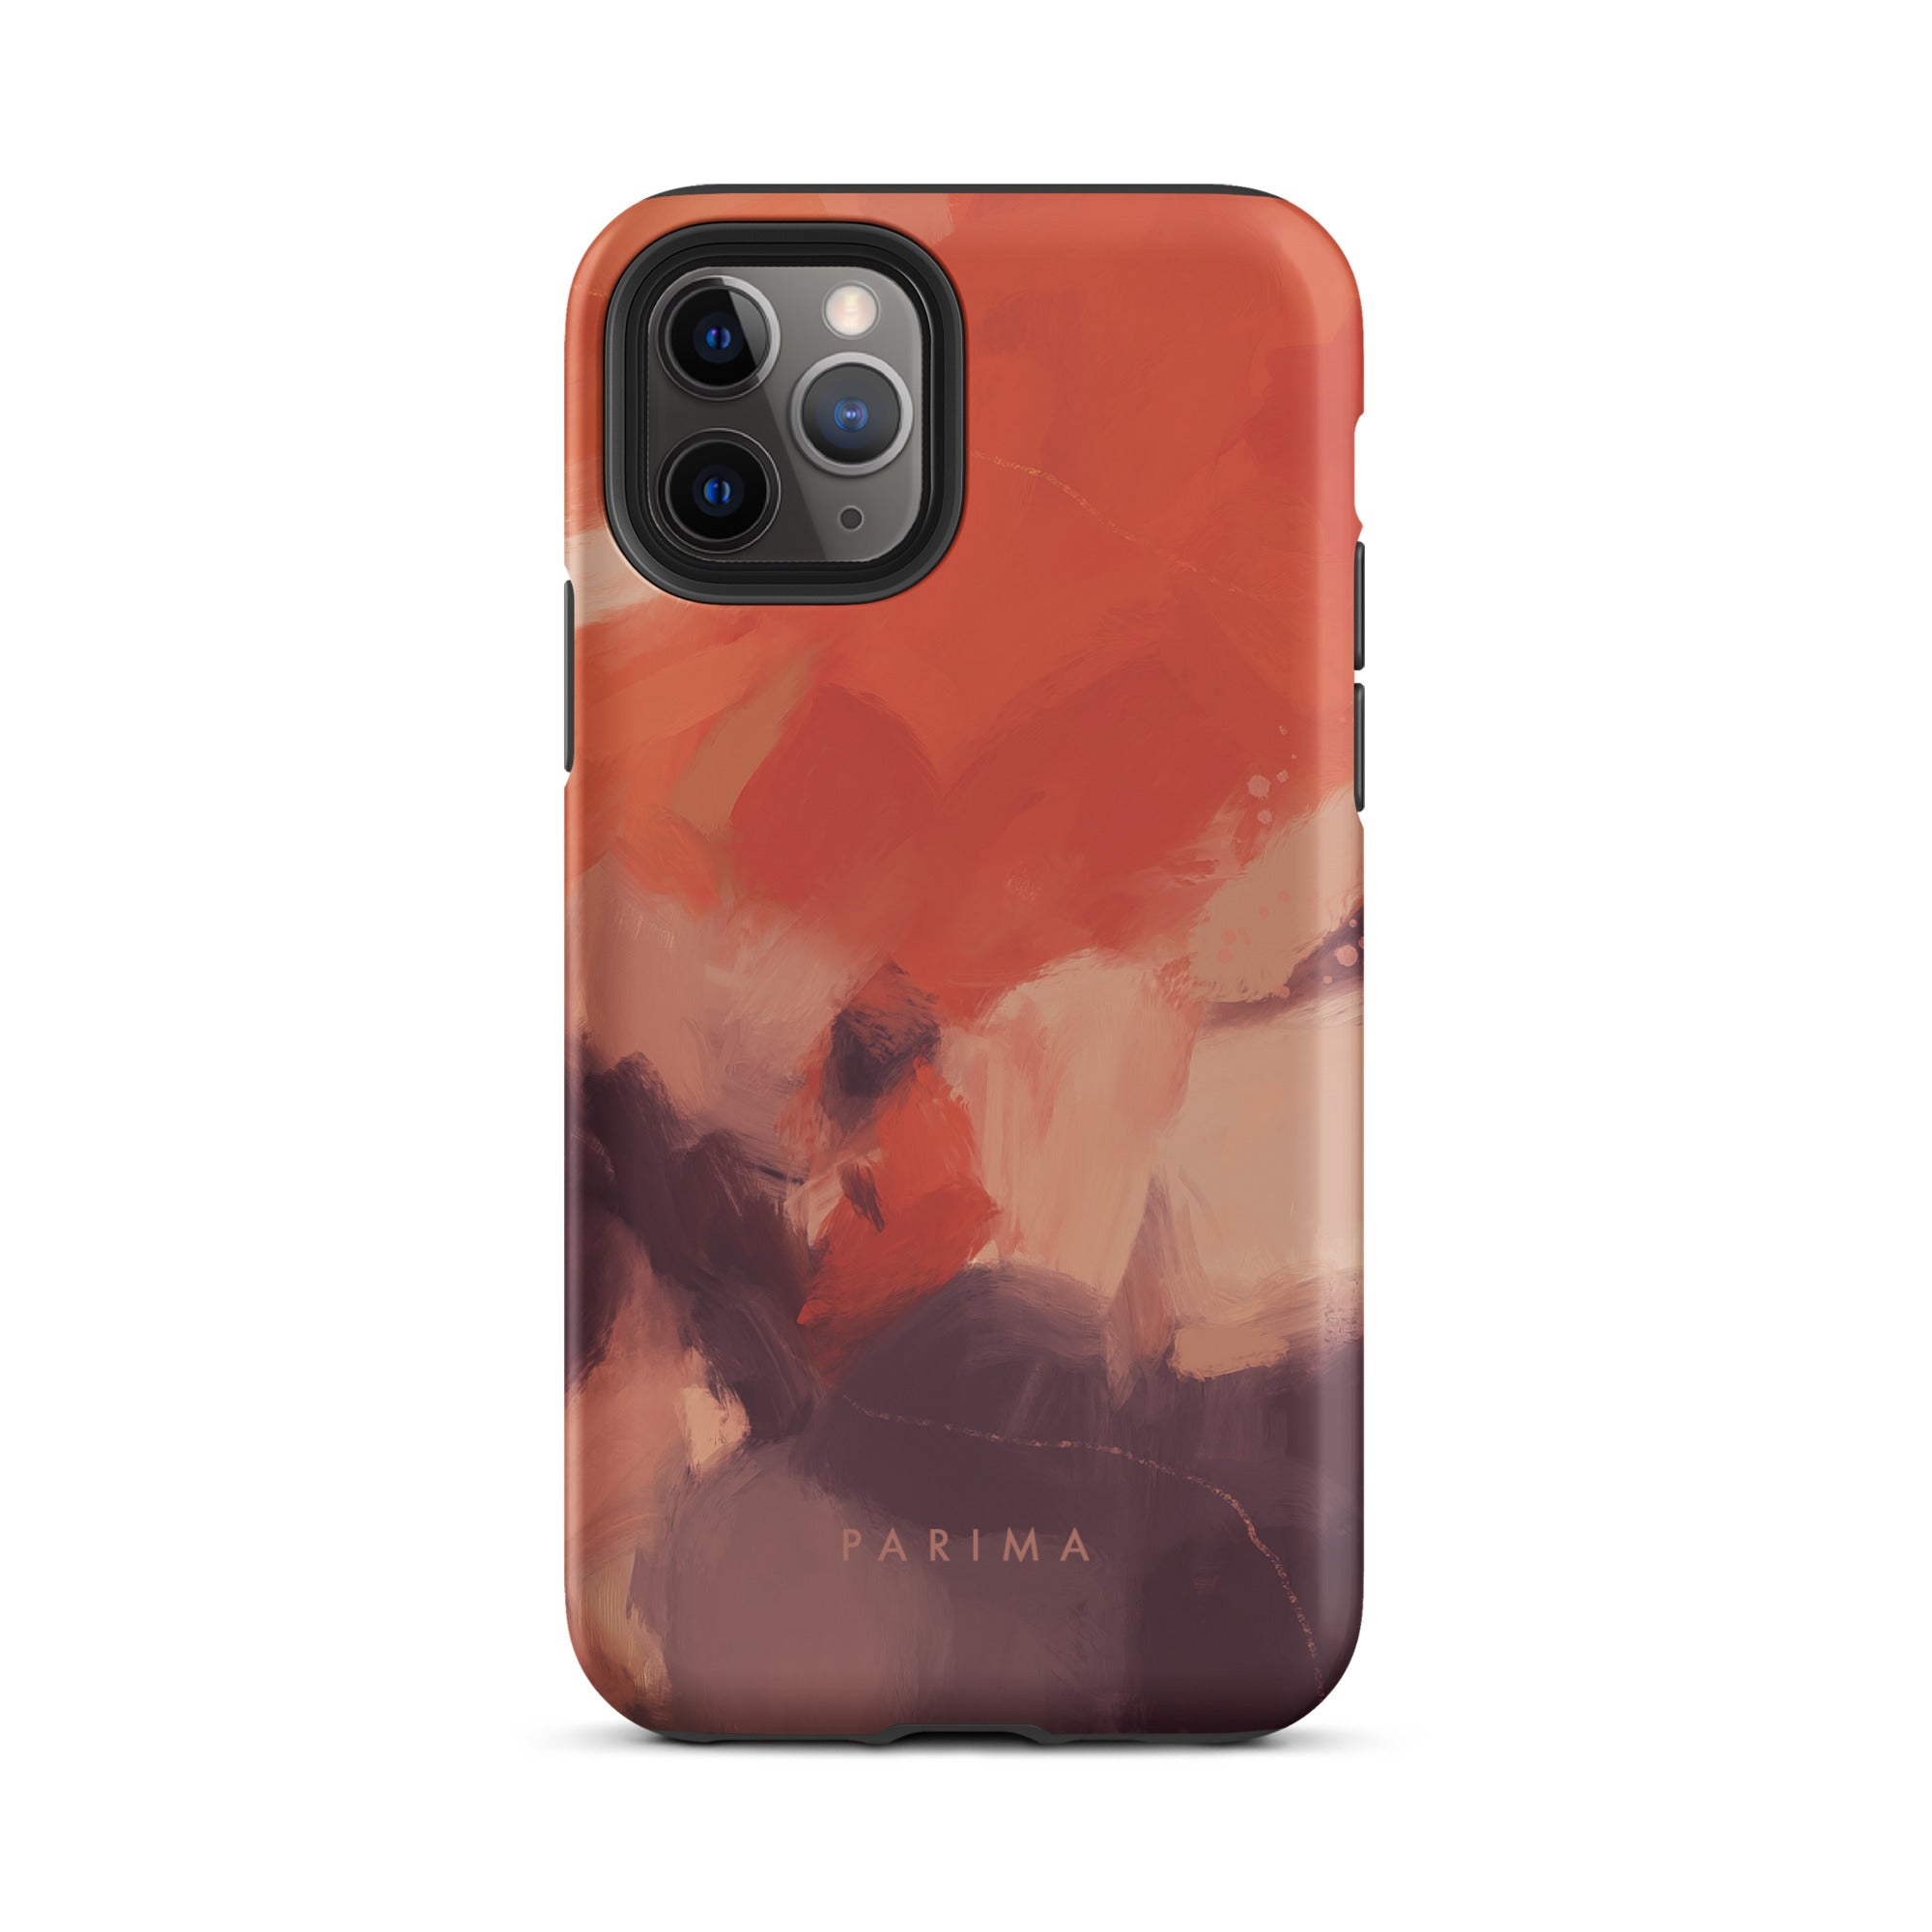 Autumn, orange and purple abstract art - iPhone 11 Pro tough case by Parima Studio